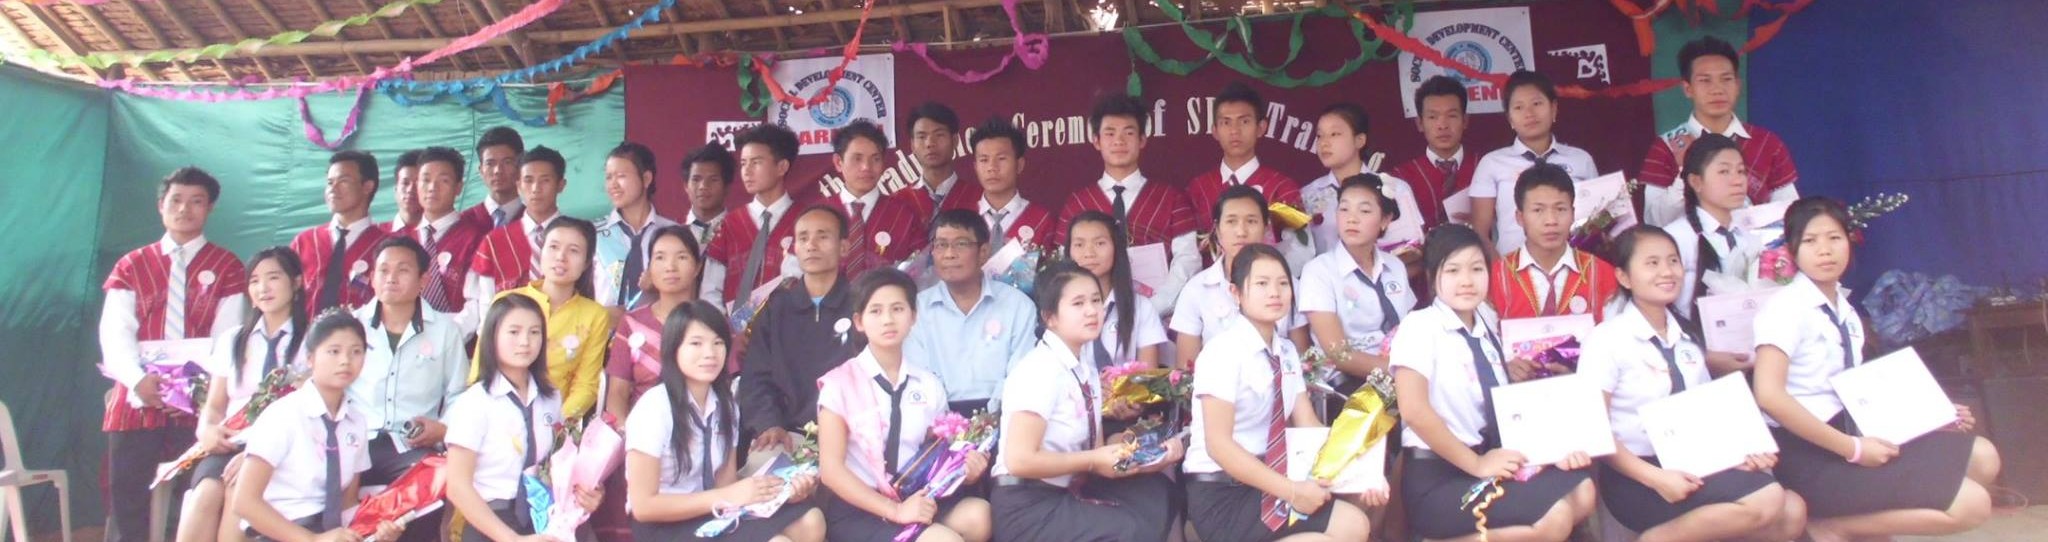 Archived 2014: Basic Course Graduation Ceremony